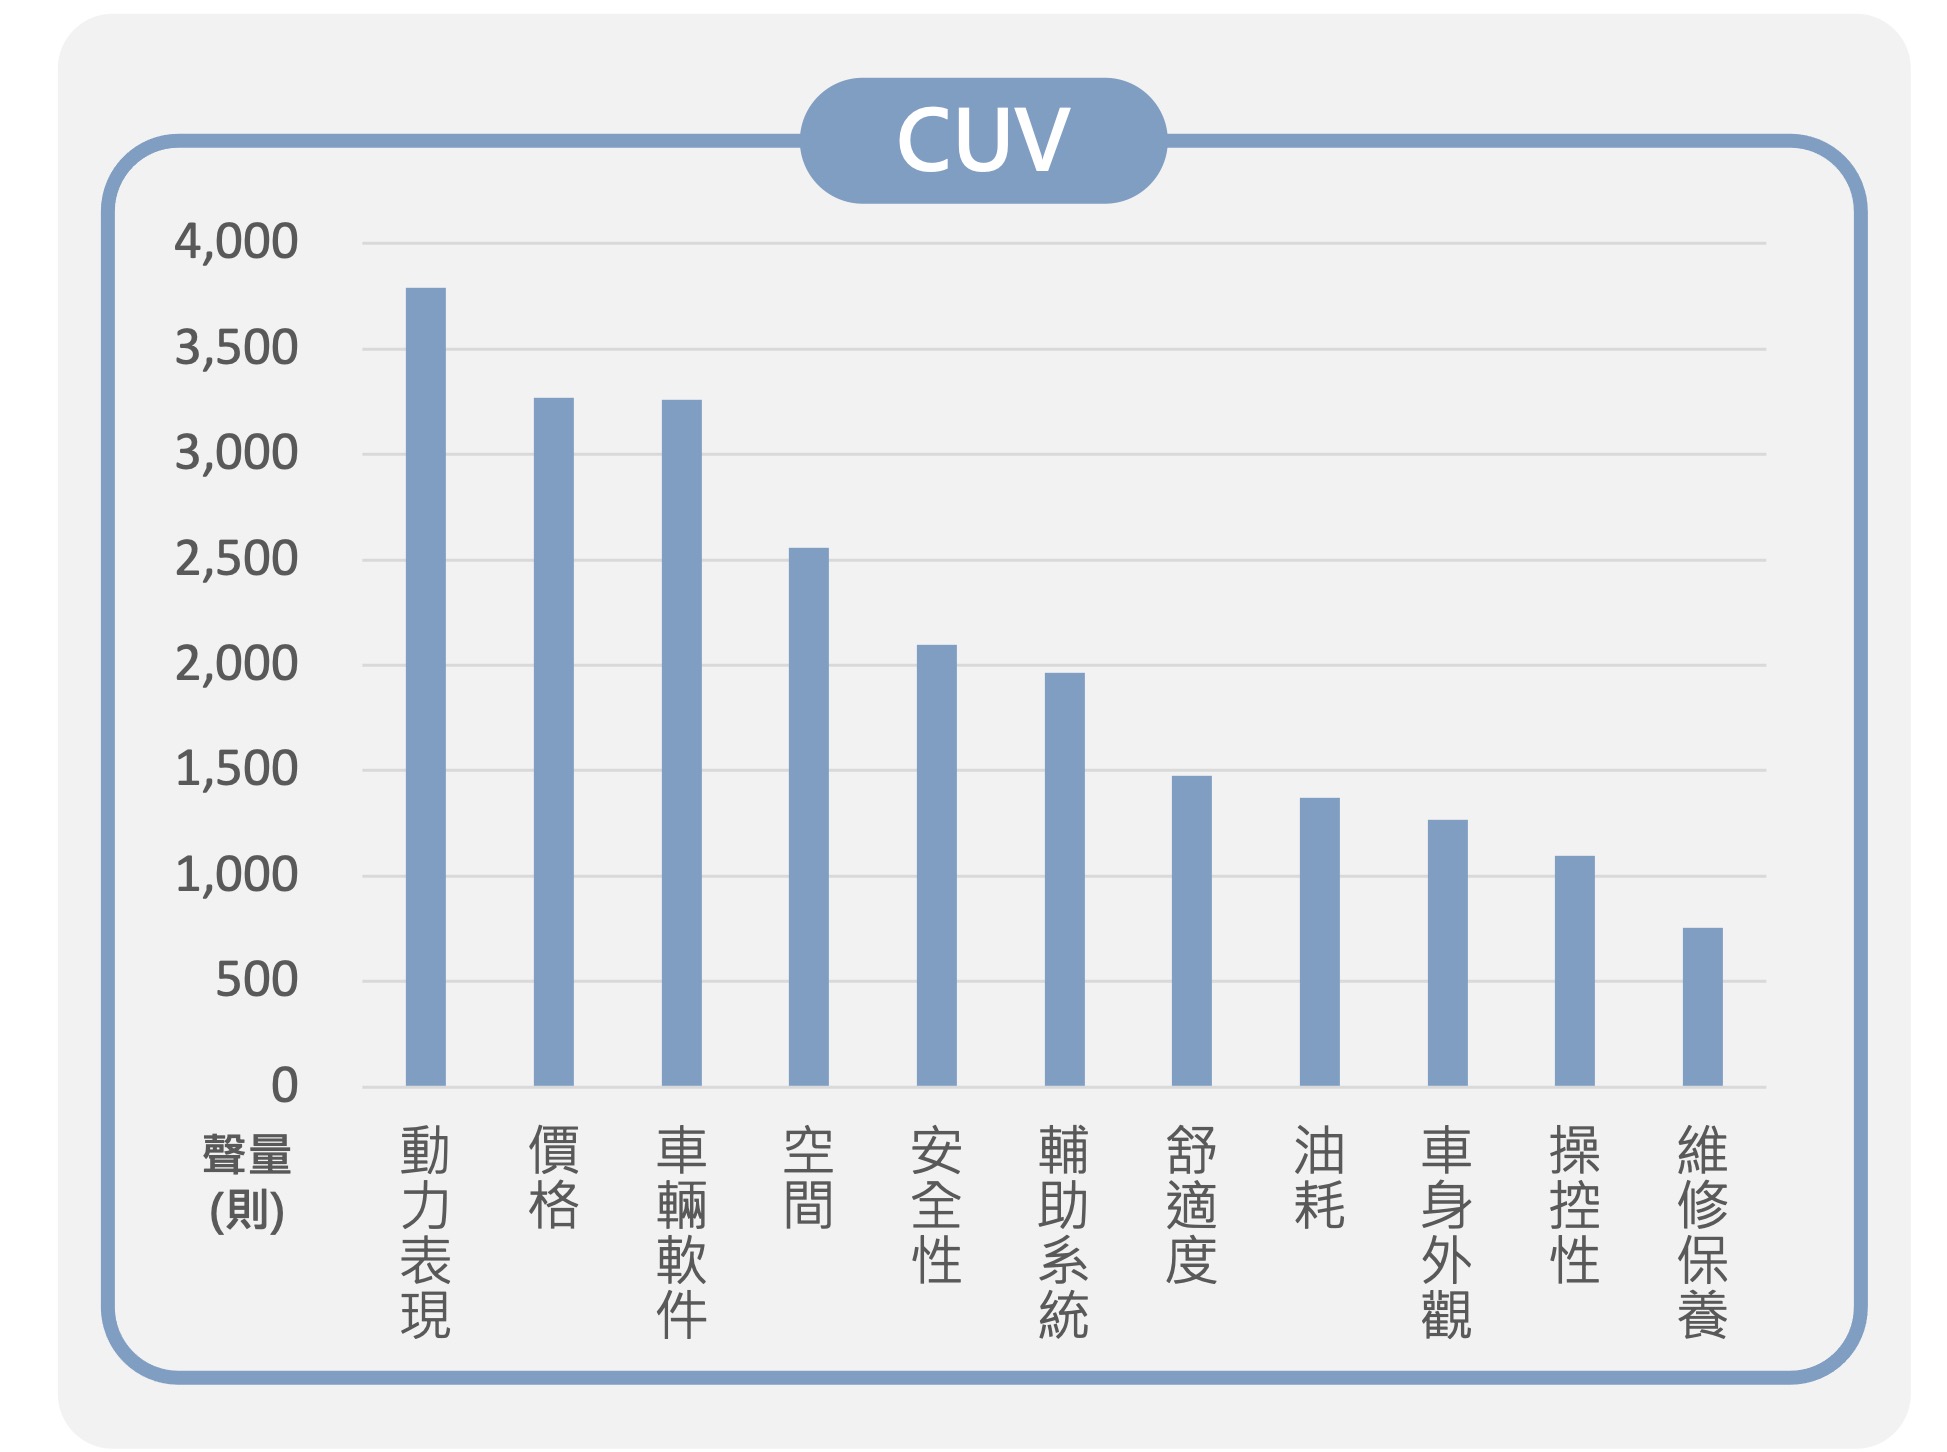 CUV選購要素聲量排行